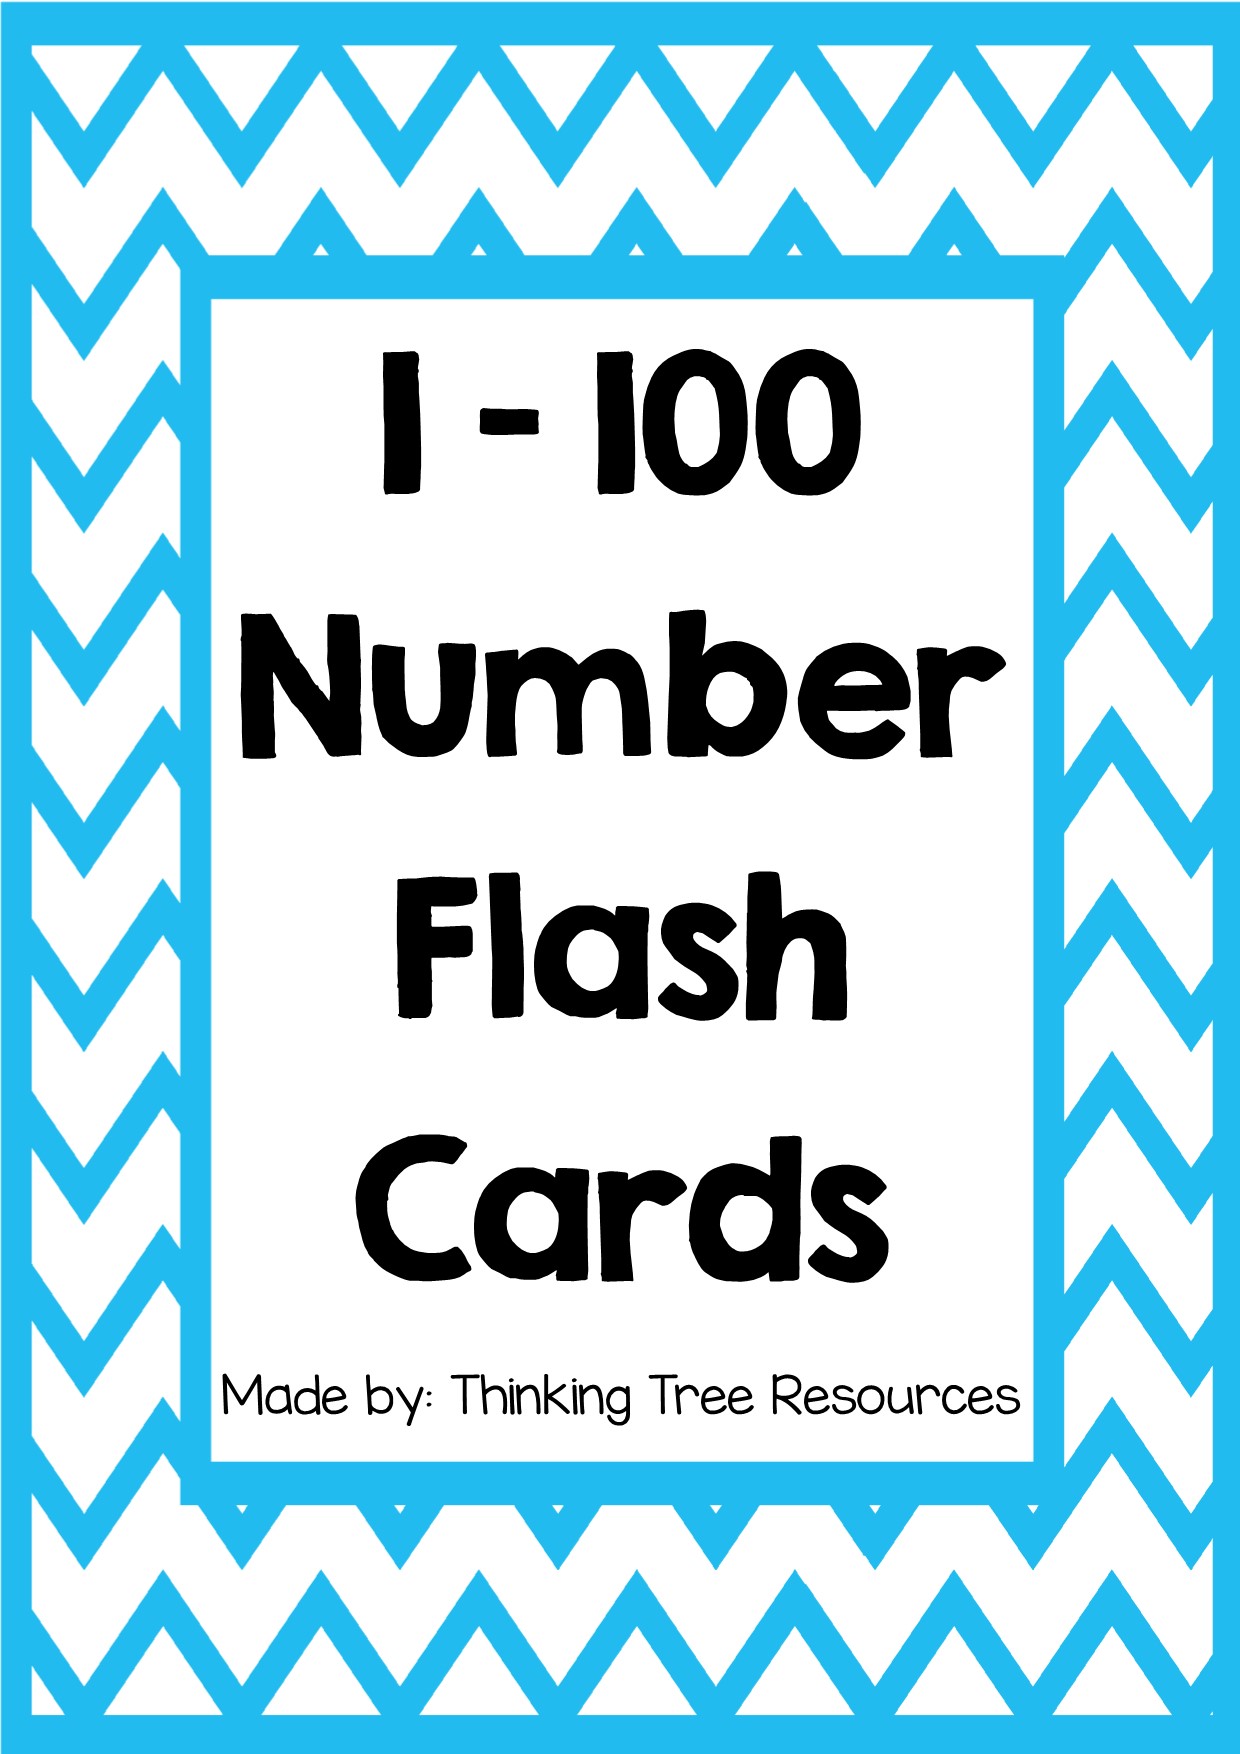 1 - 100 Number Flash Cards - Chevron Set 2